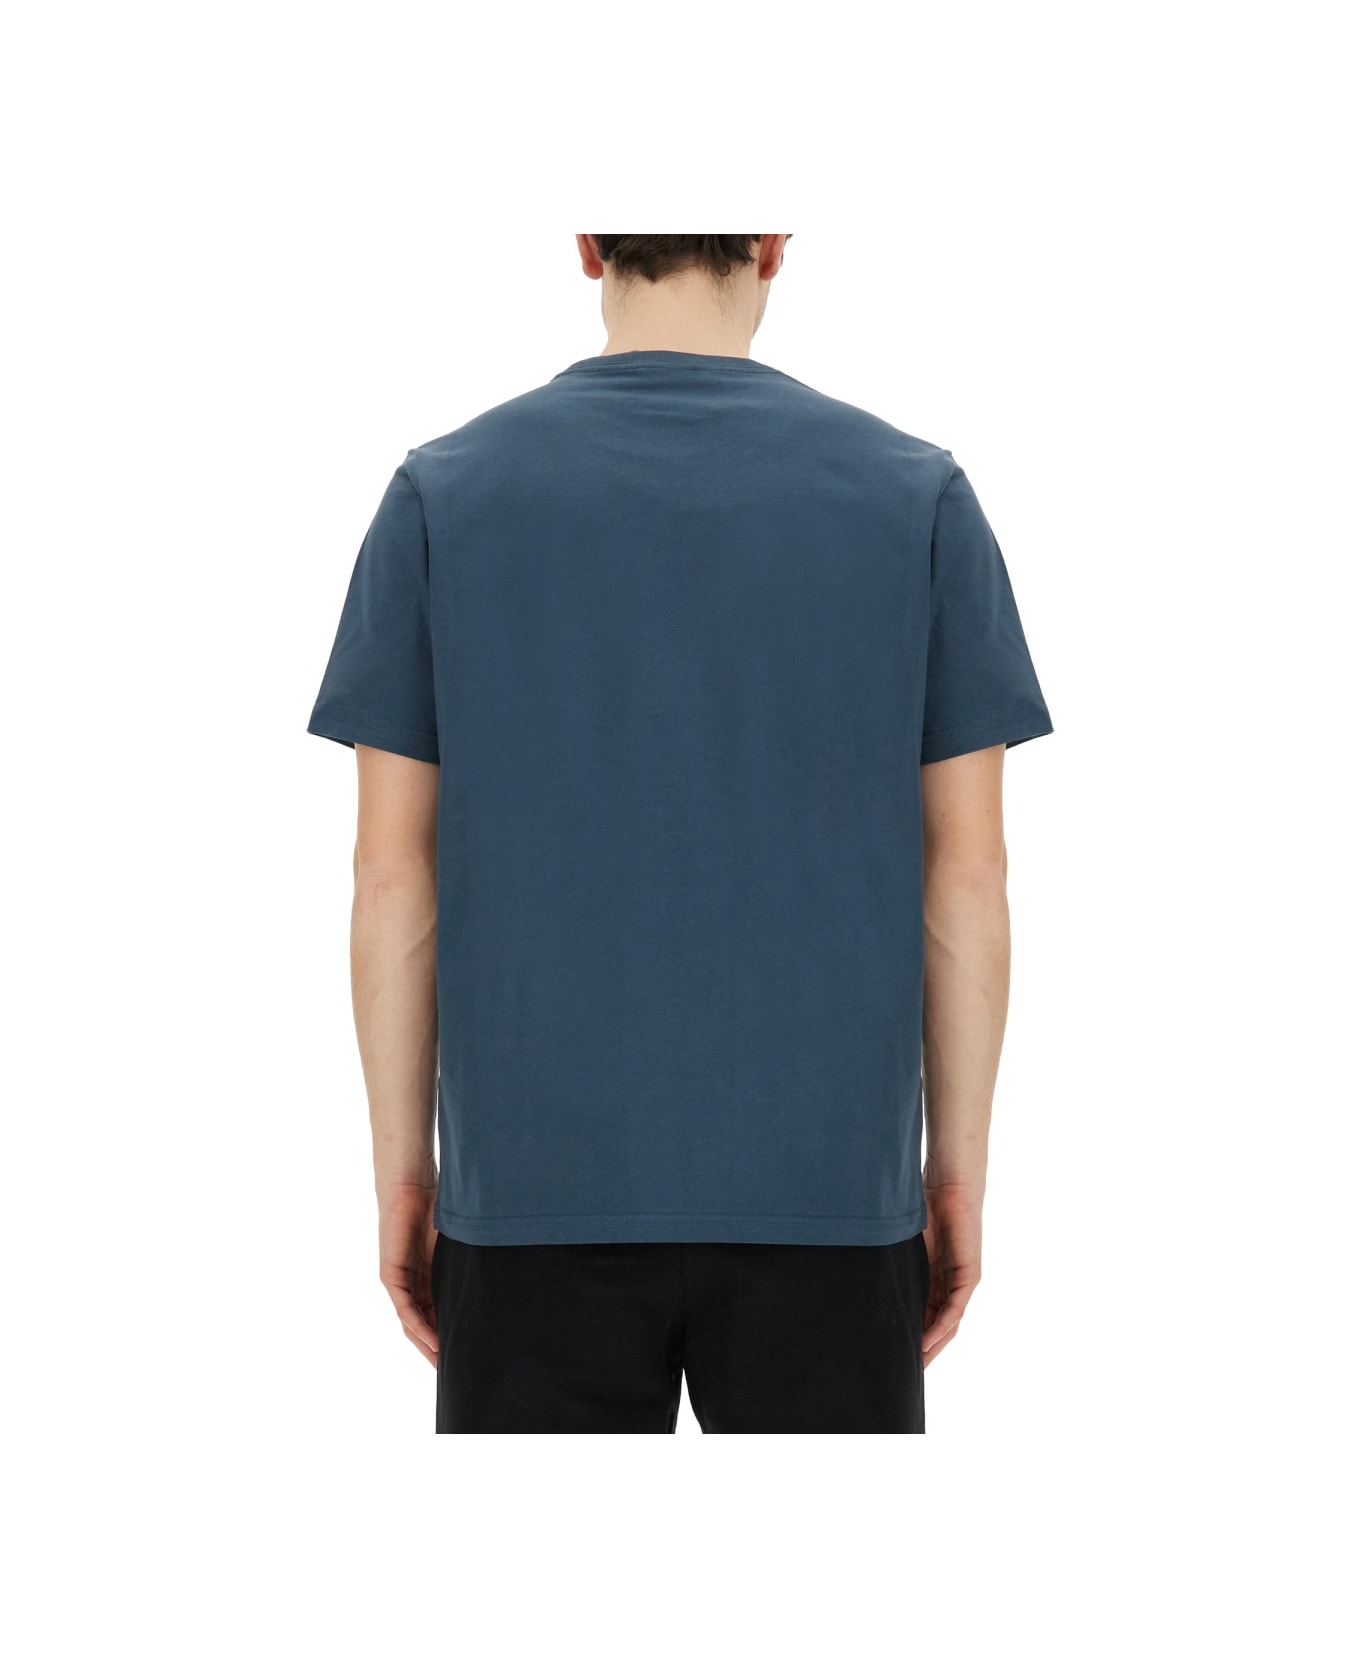 Paul Smith 'zebra' T-shirt - Blue